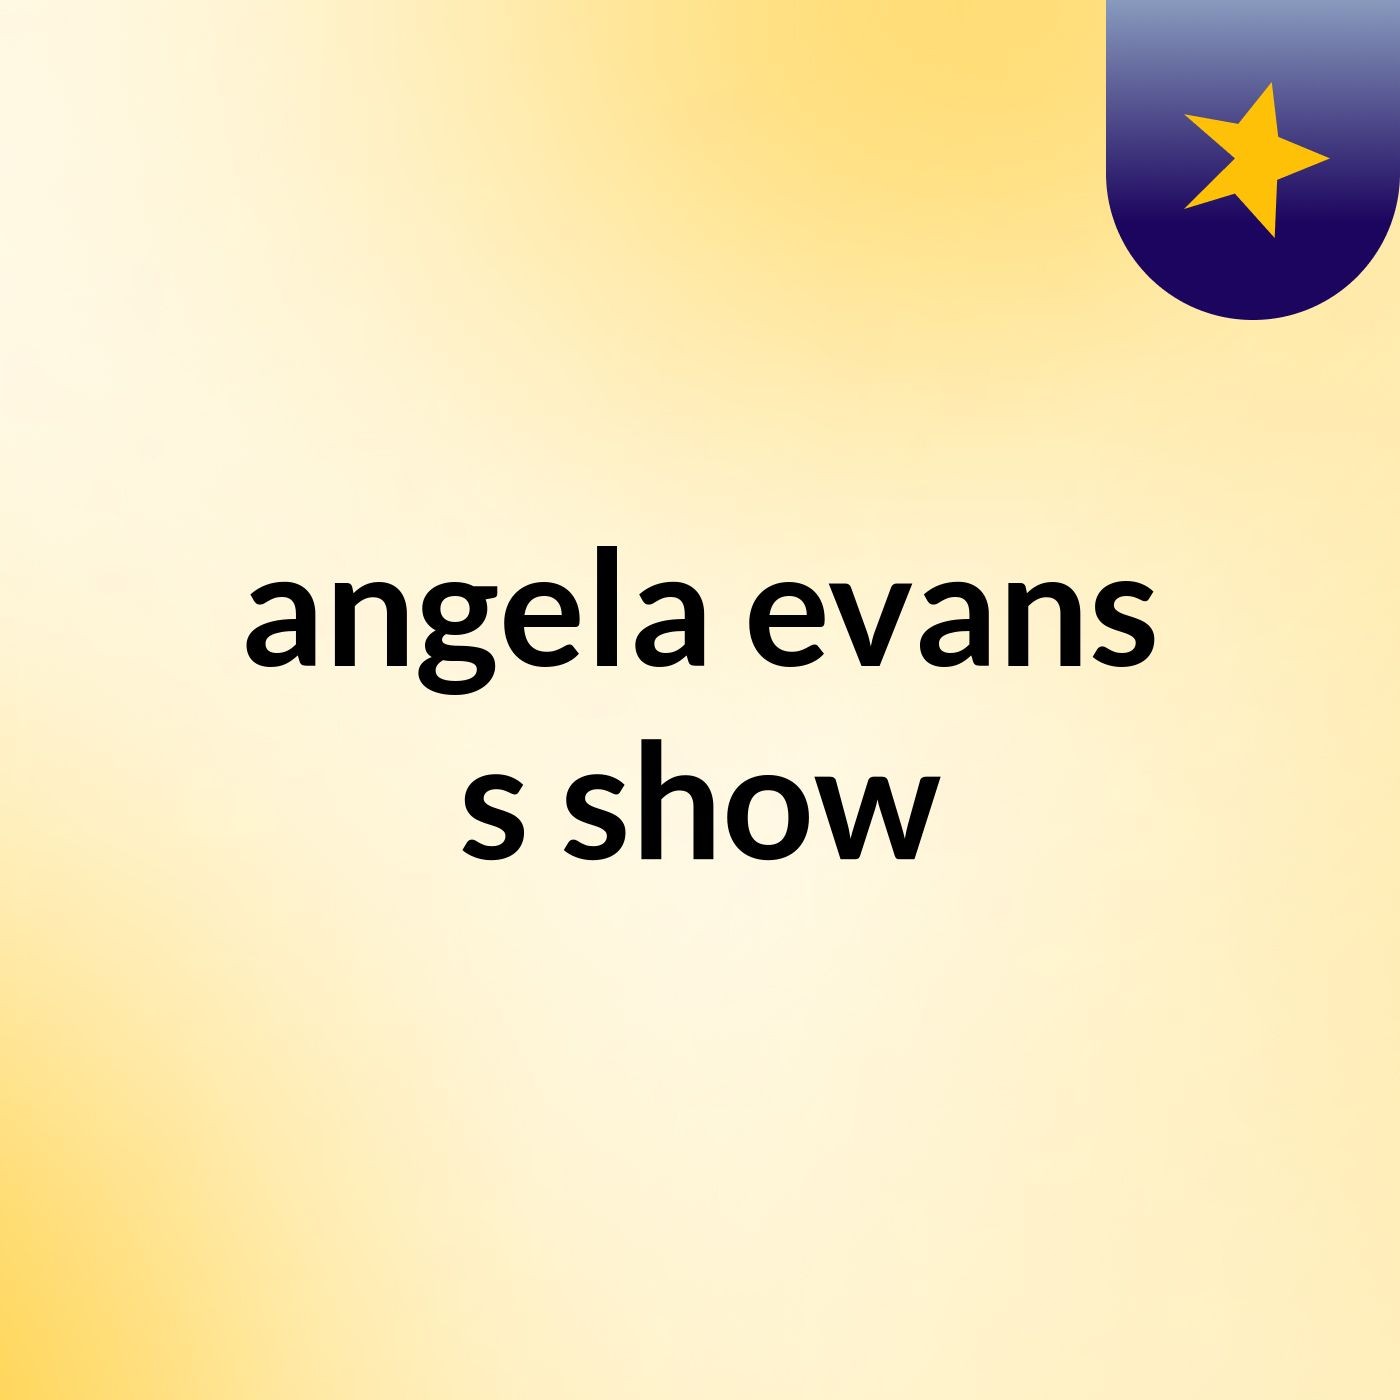 angela evans's show